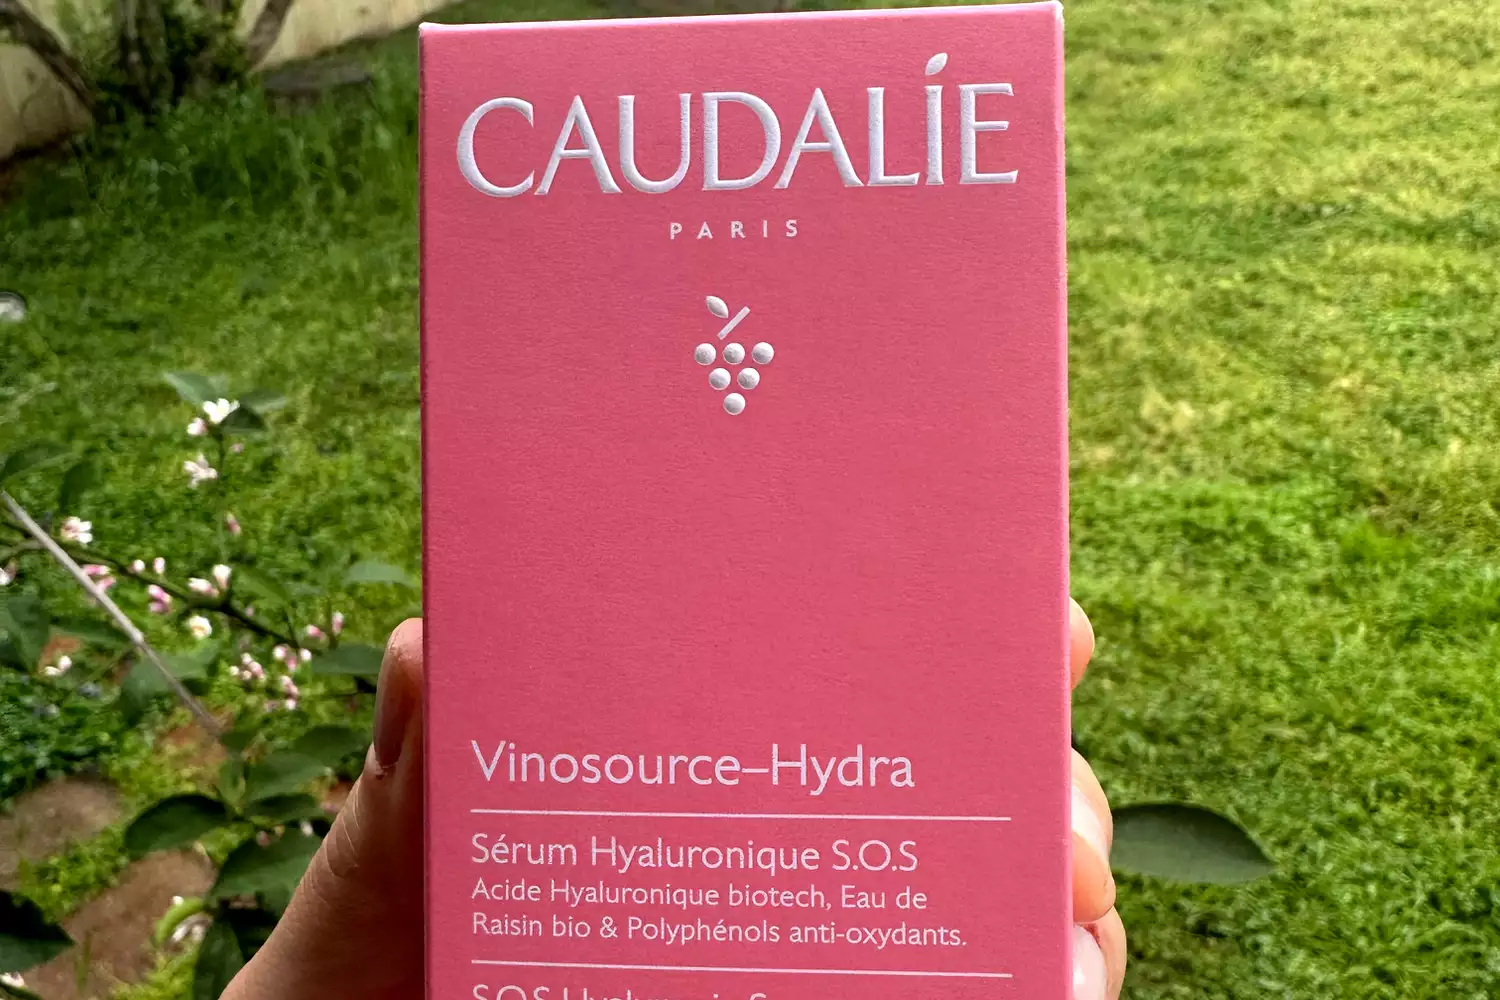 The box for Caudalie Vinosource-Hydra SOS Hydrating Hyaluronic Acid Serum